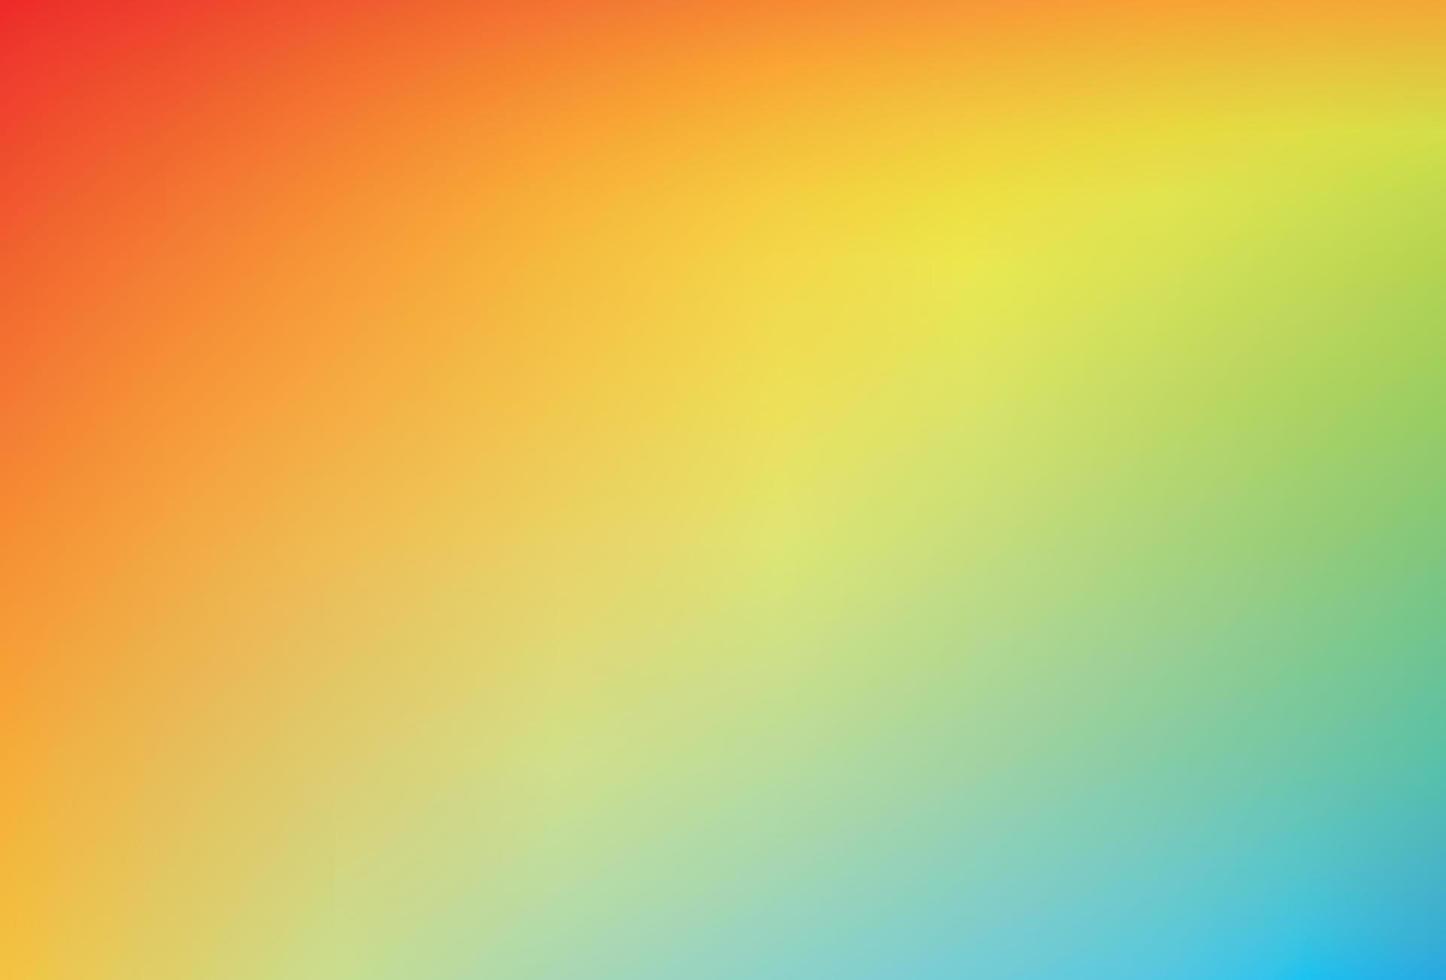 fondo del arco iris telón de fondo de gradiente de arco iris. vector